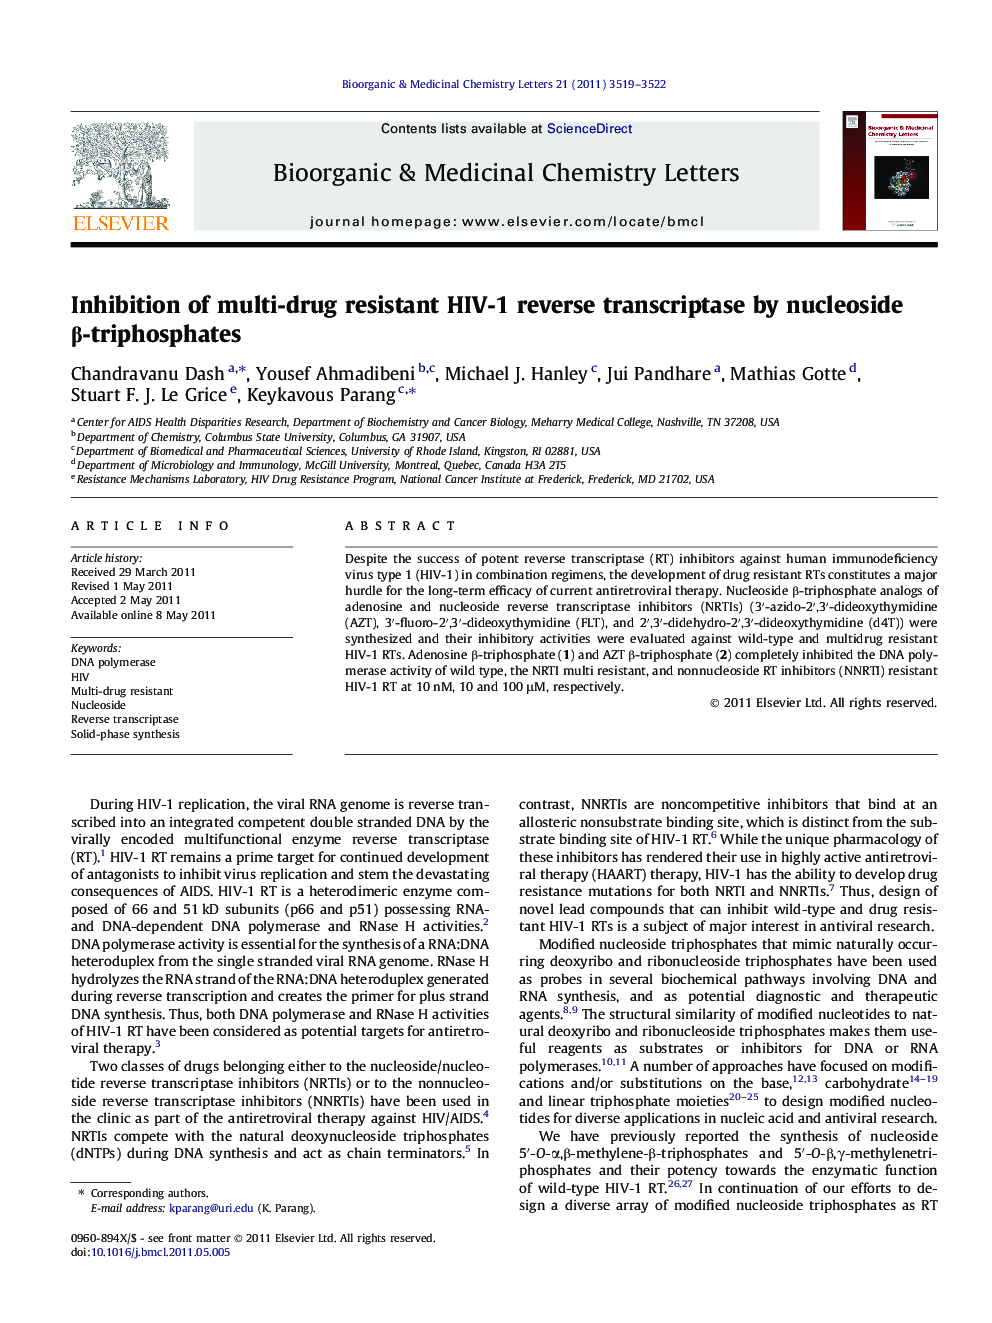 Inhibition of multi-drug resistant HIV-1 reverse transcriptase by nucleoside β-triphosphates